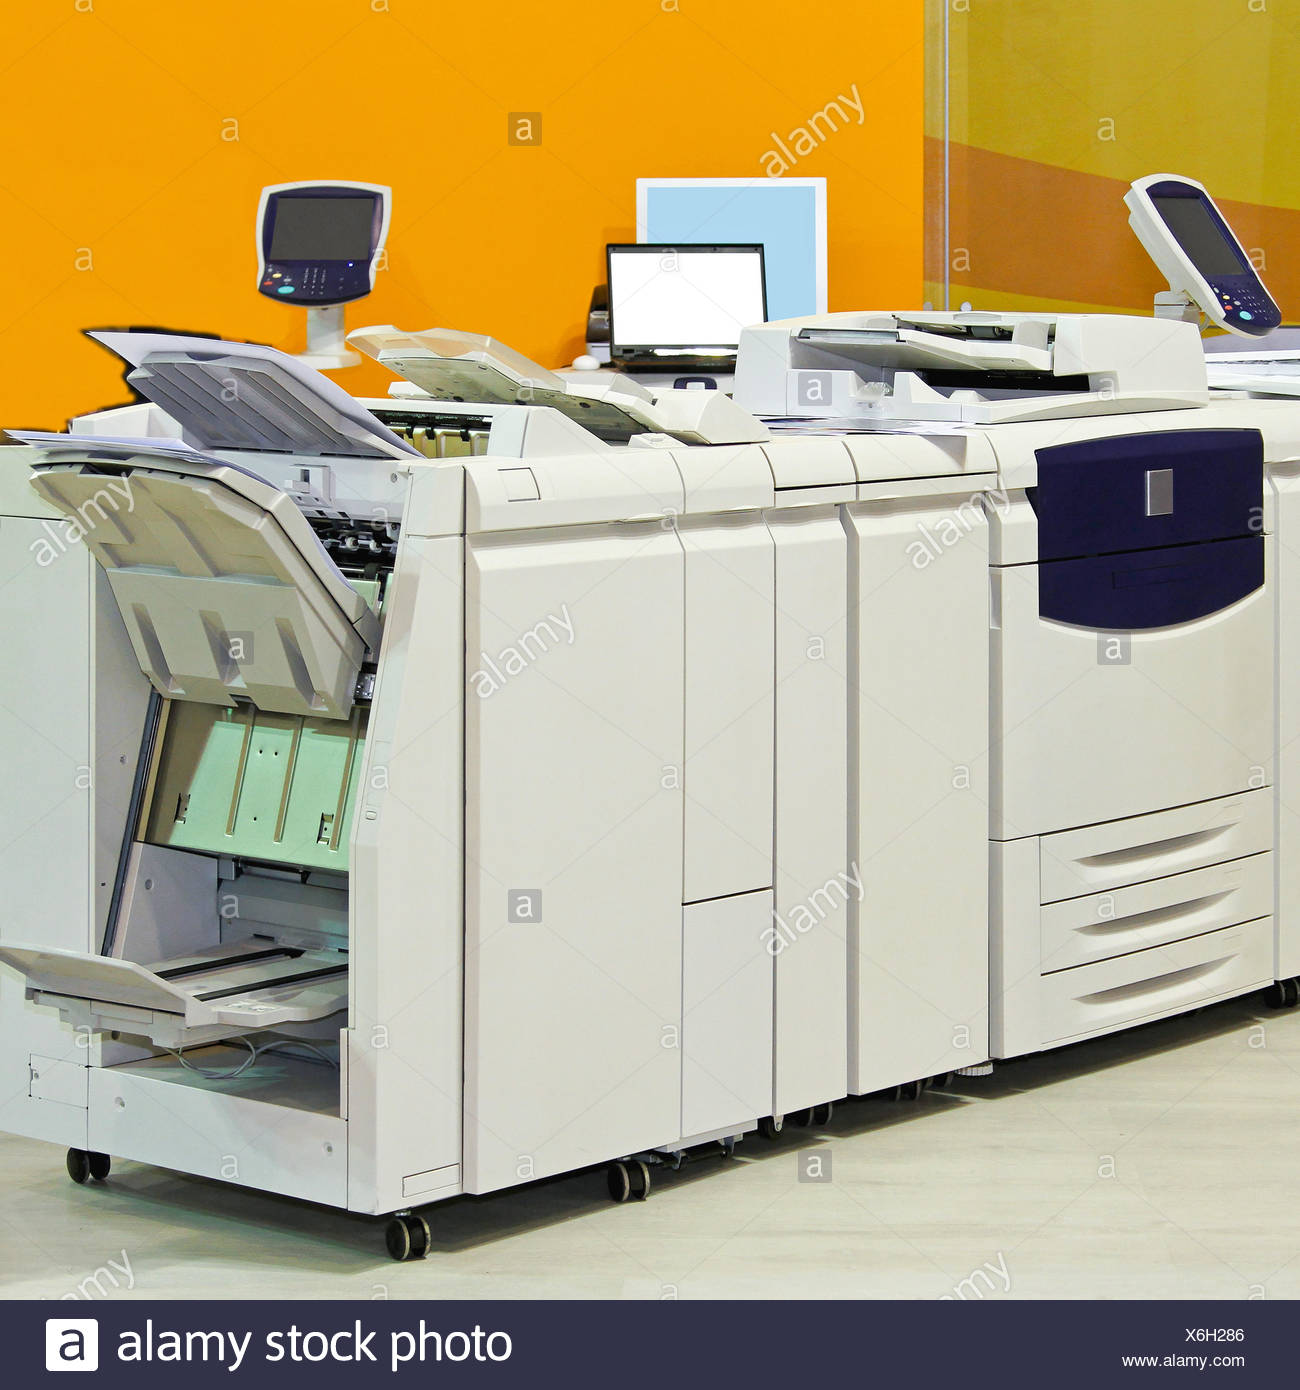 big printer machine